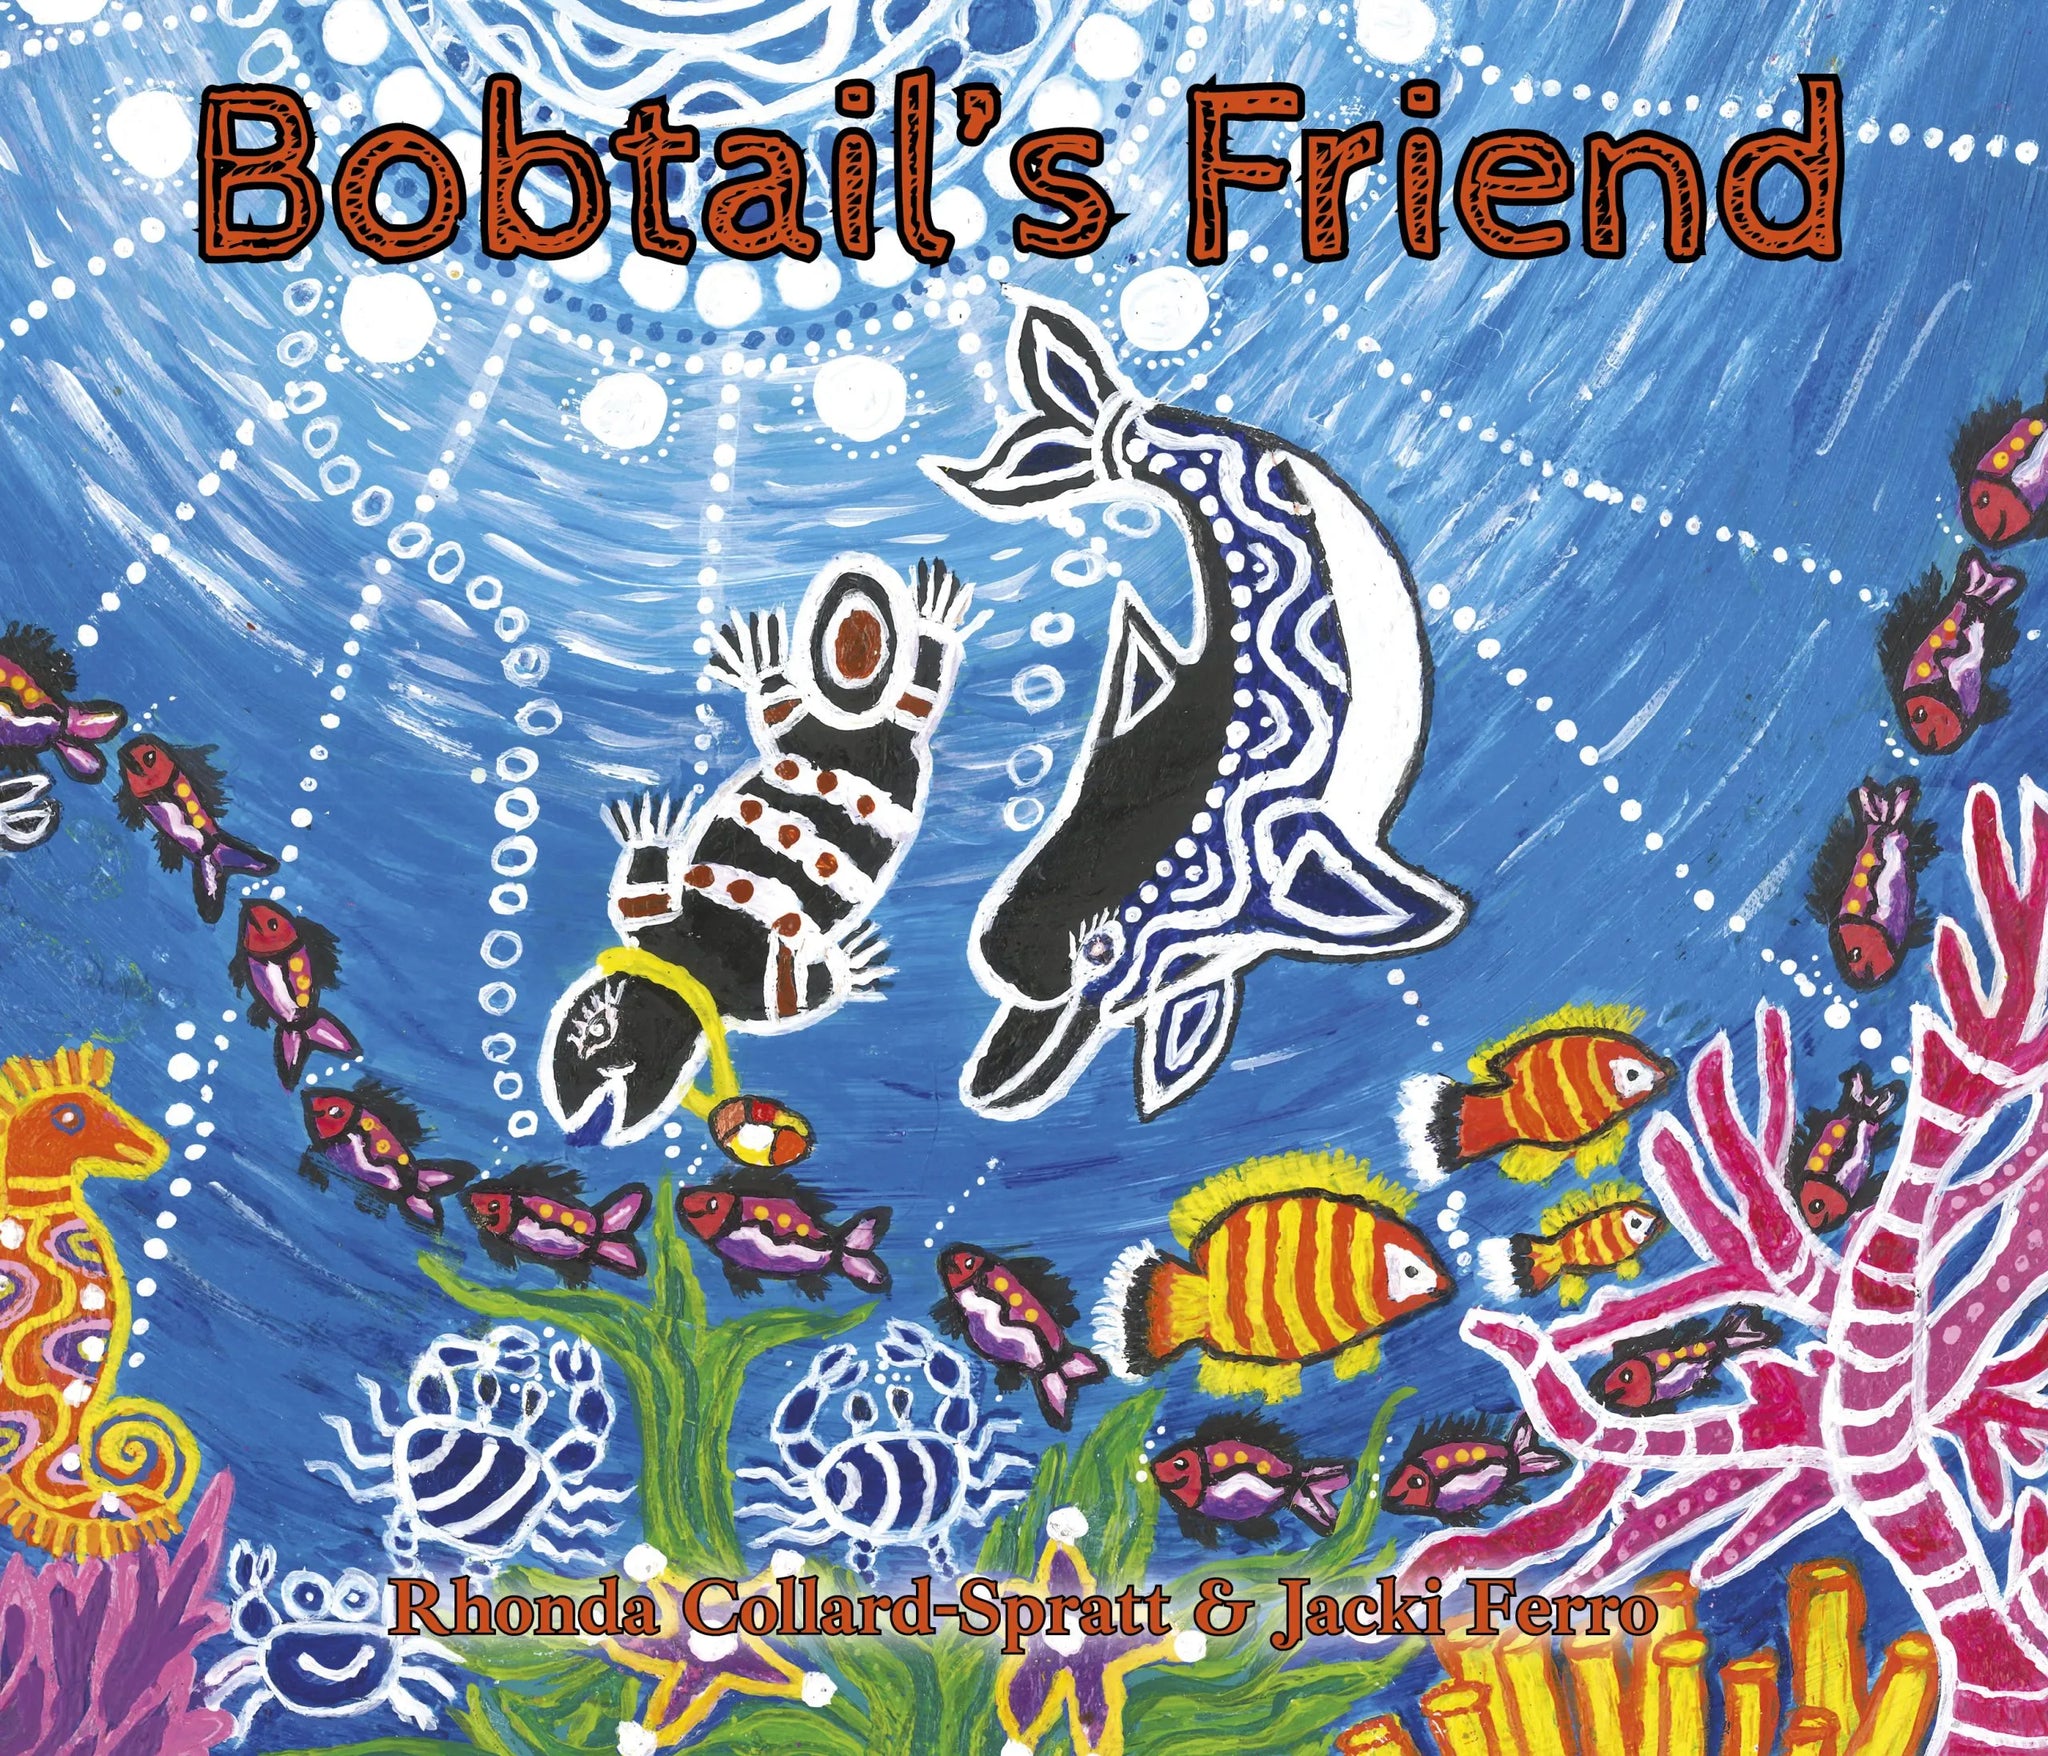 Bobtail’s Friend